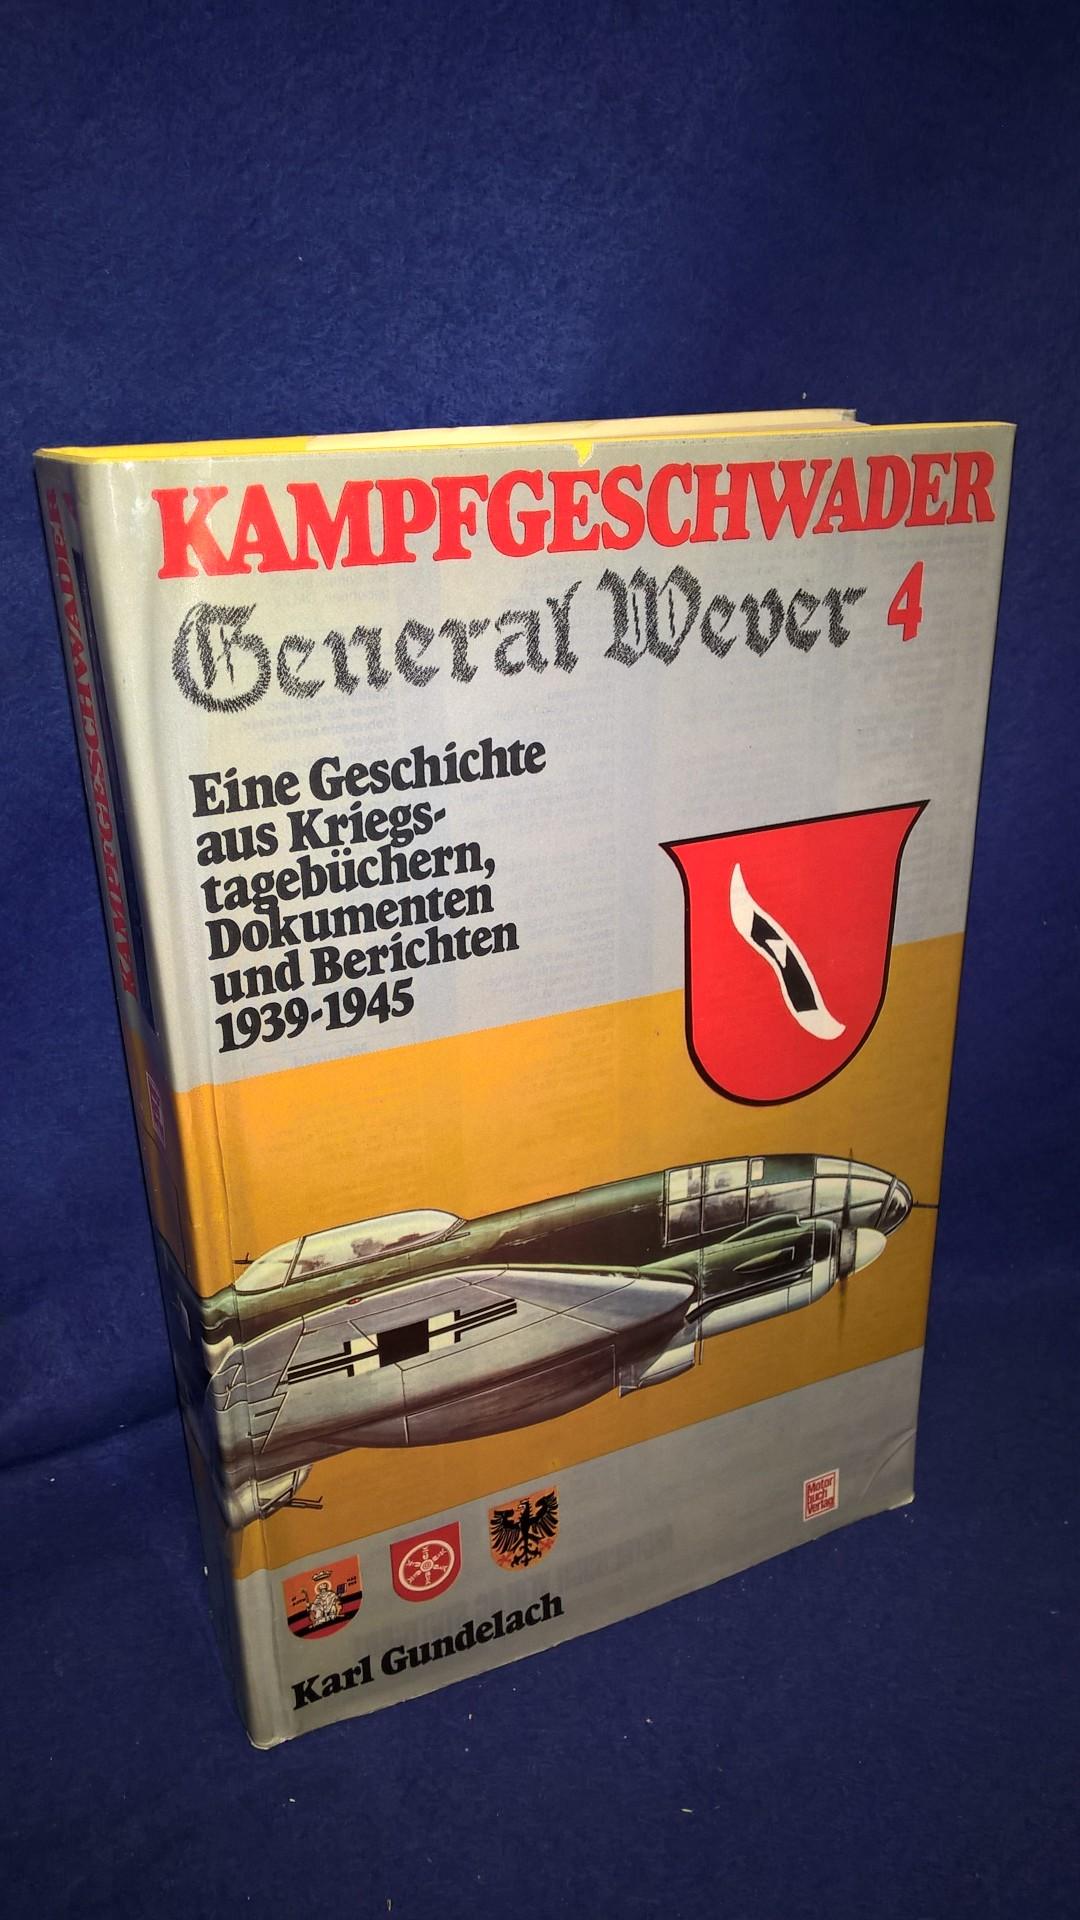 Kampfgeschwader "General Wever" 4